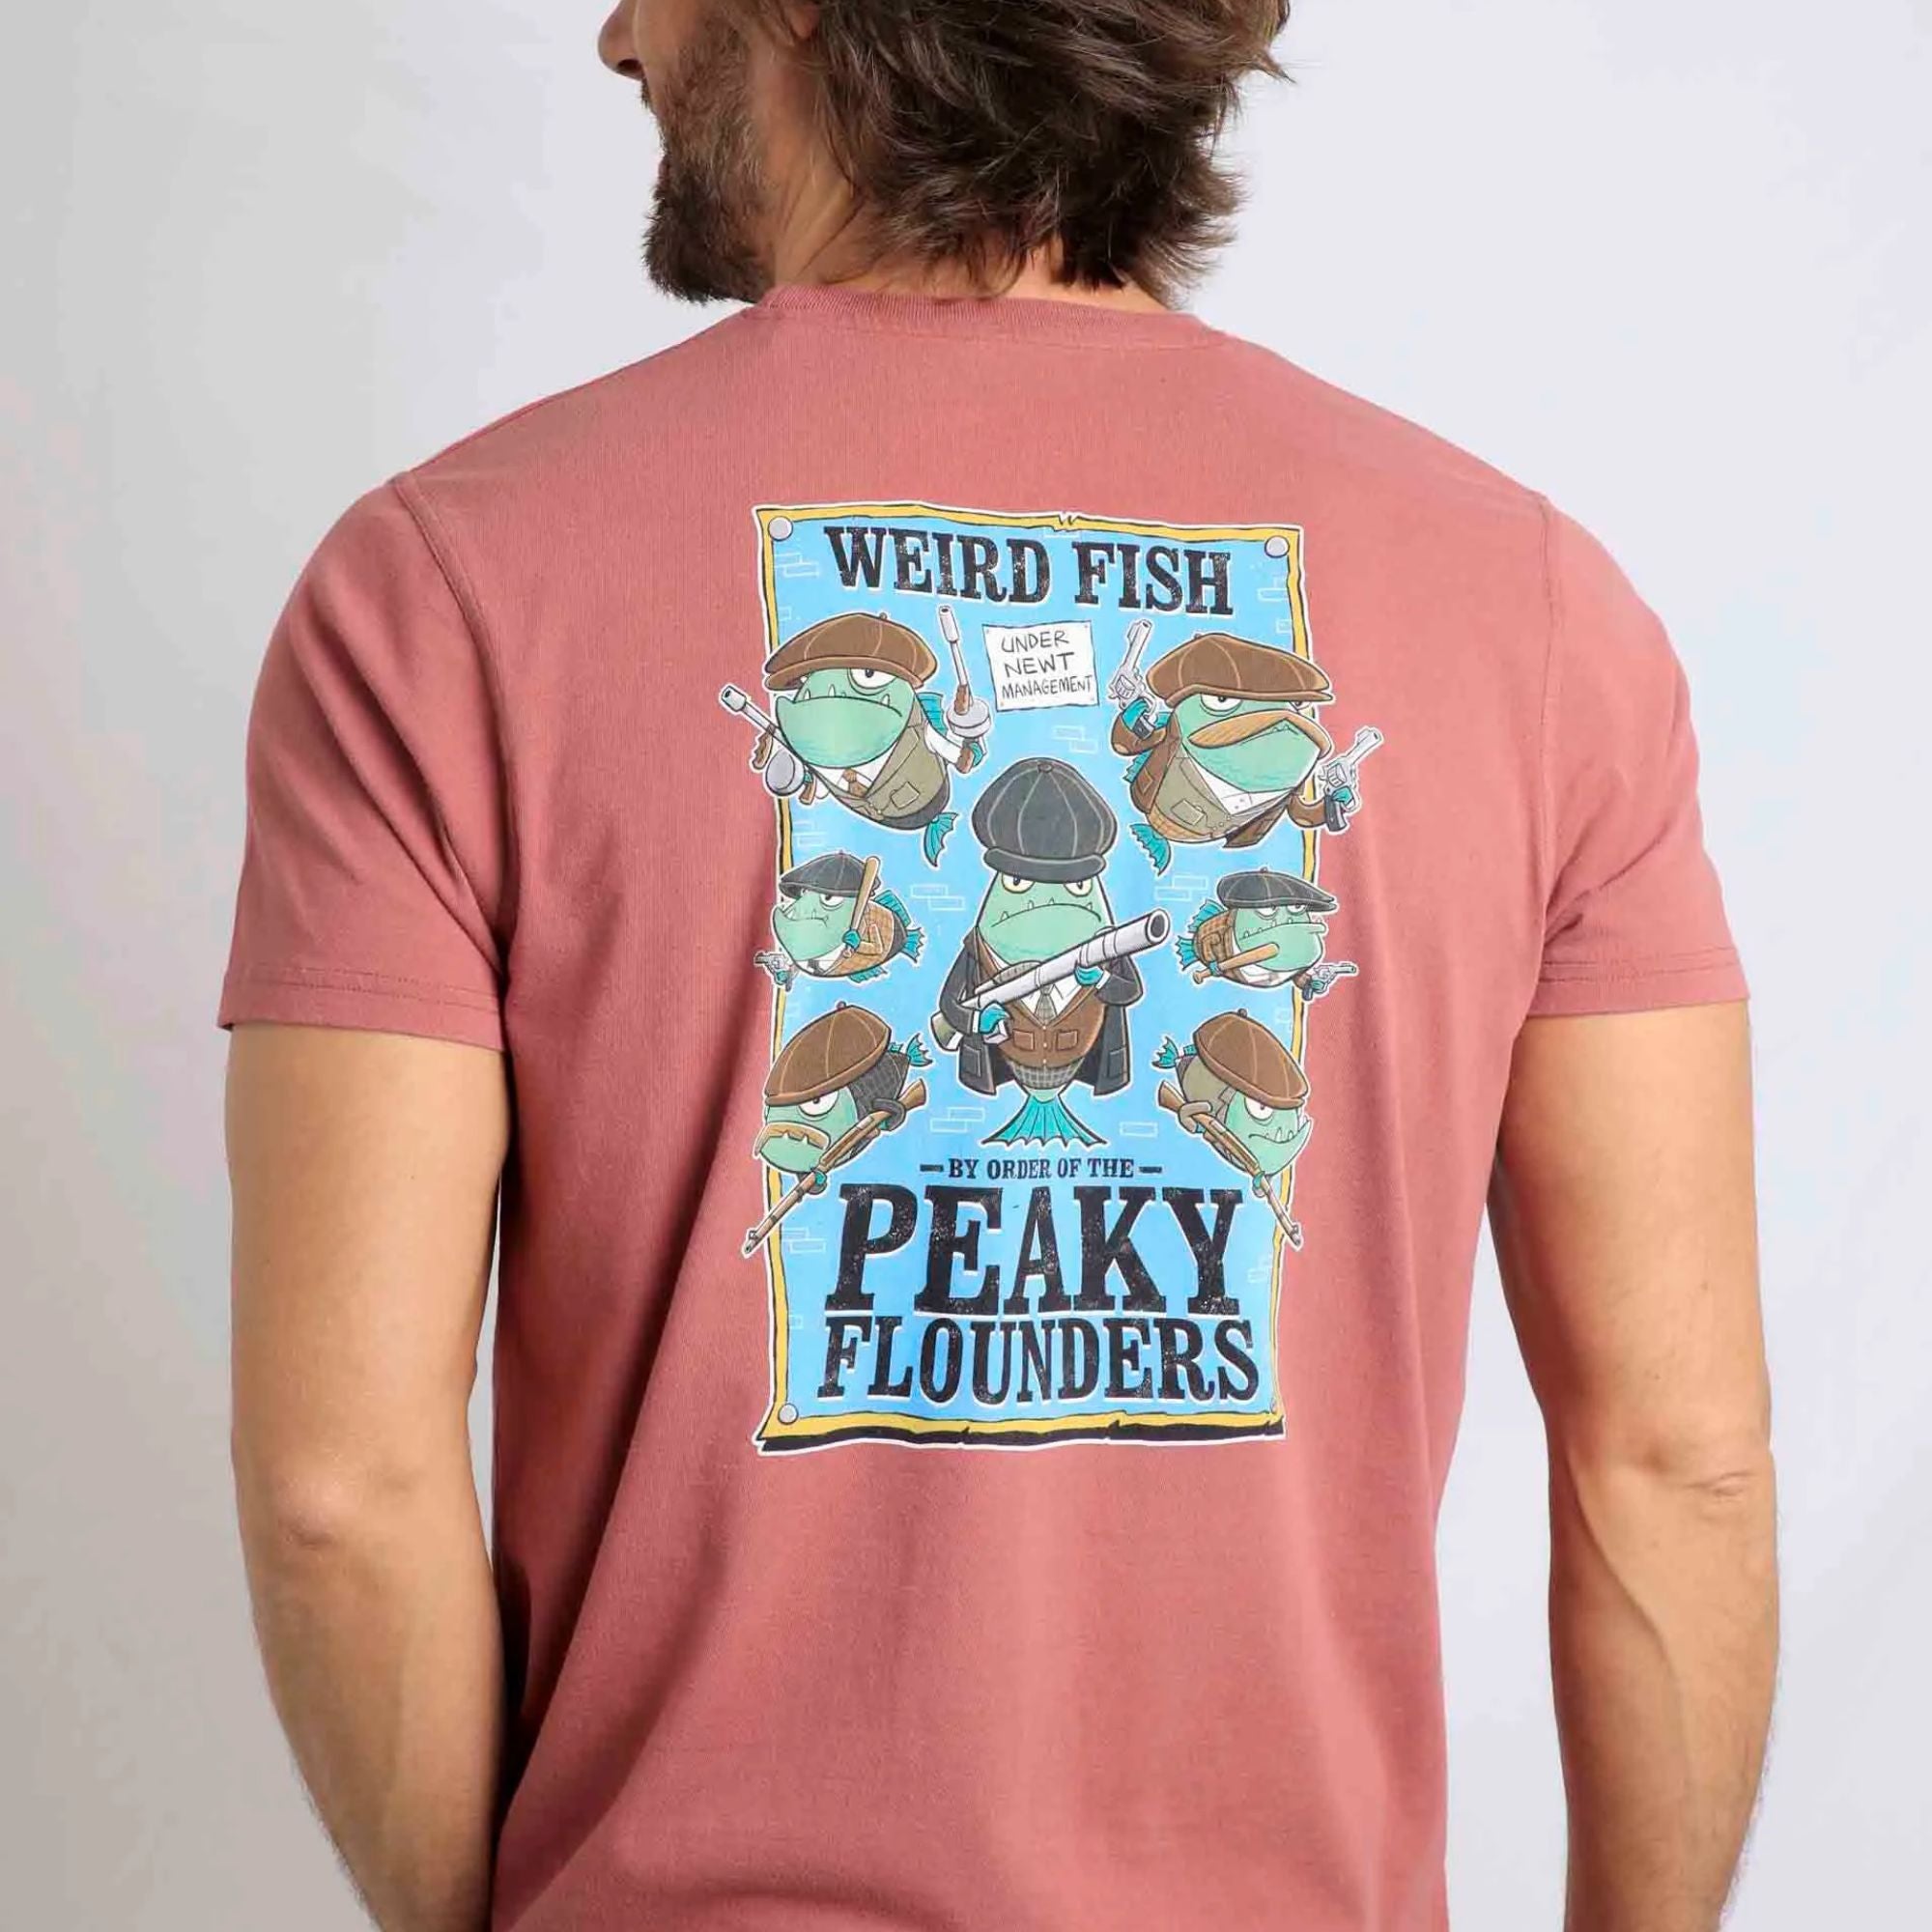 Weirdfish Peaky Flounders Artist T-Shirt | WEIRD FISH | Portwest - The Outdoor Shop